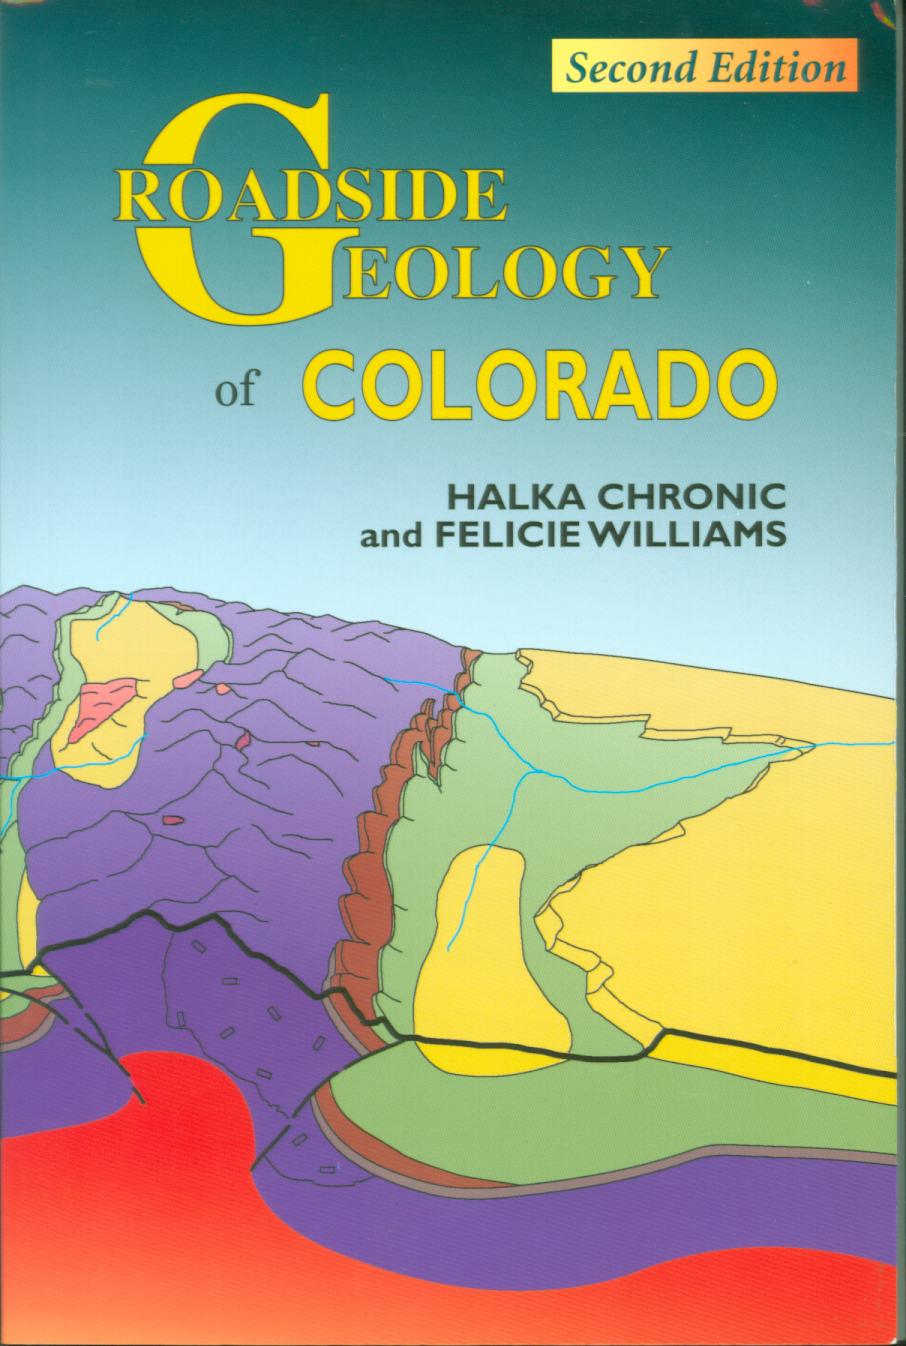 ROADSIDE GEOLOGY OF COLORADO. 